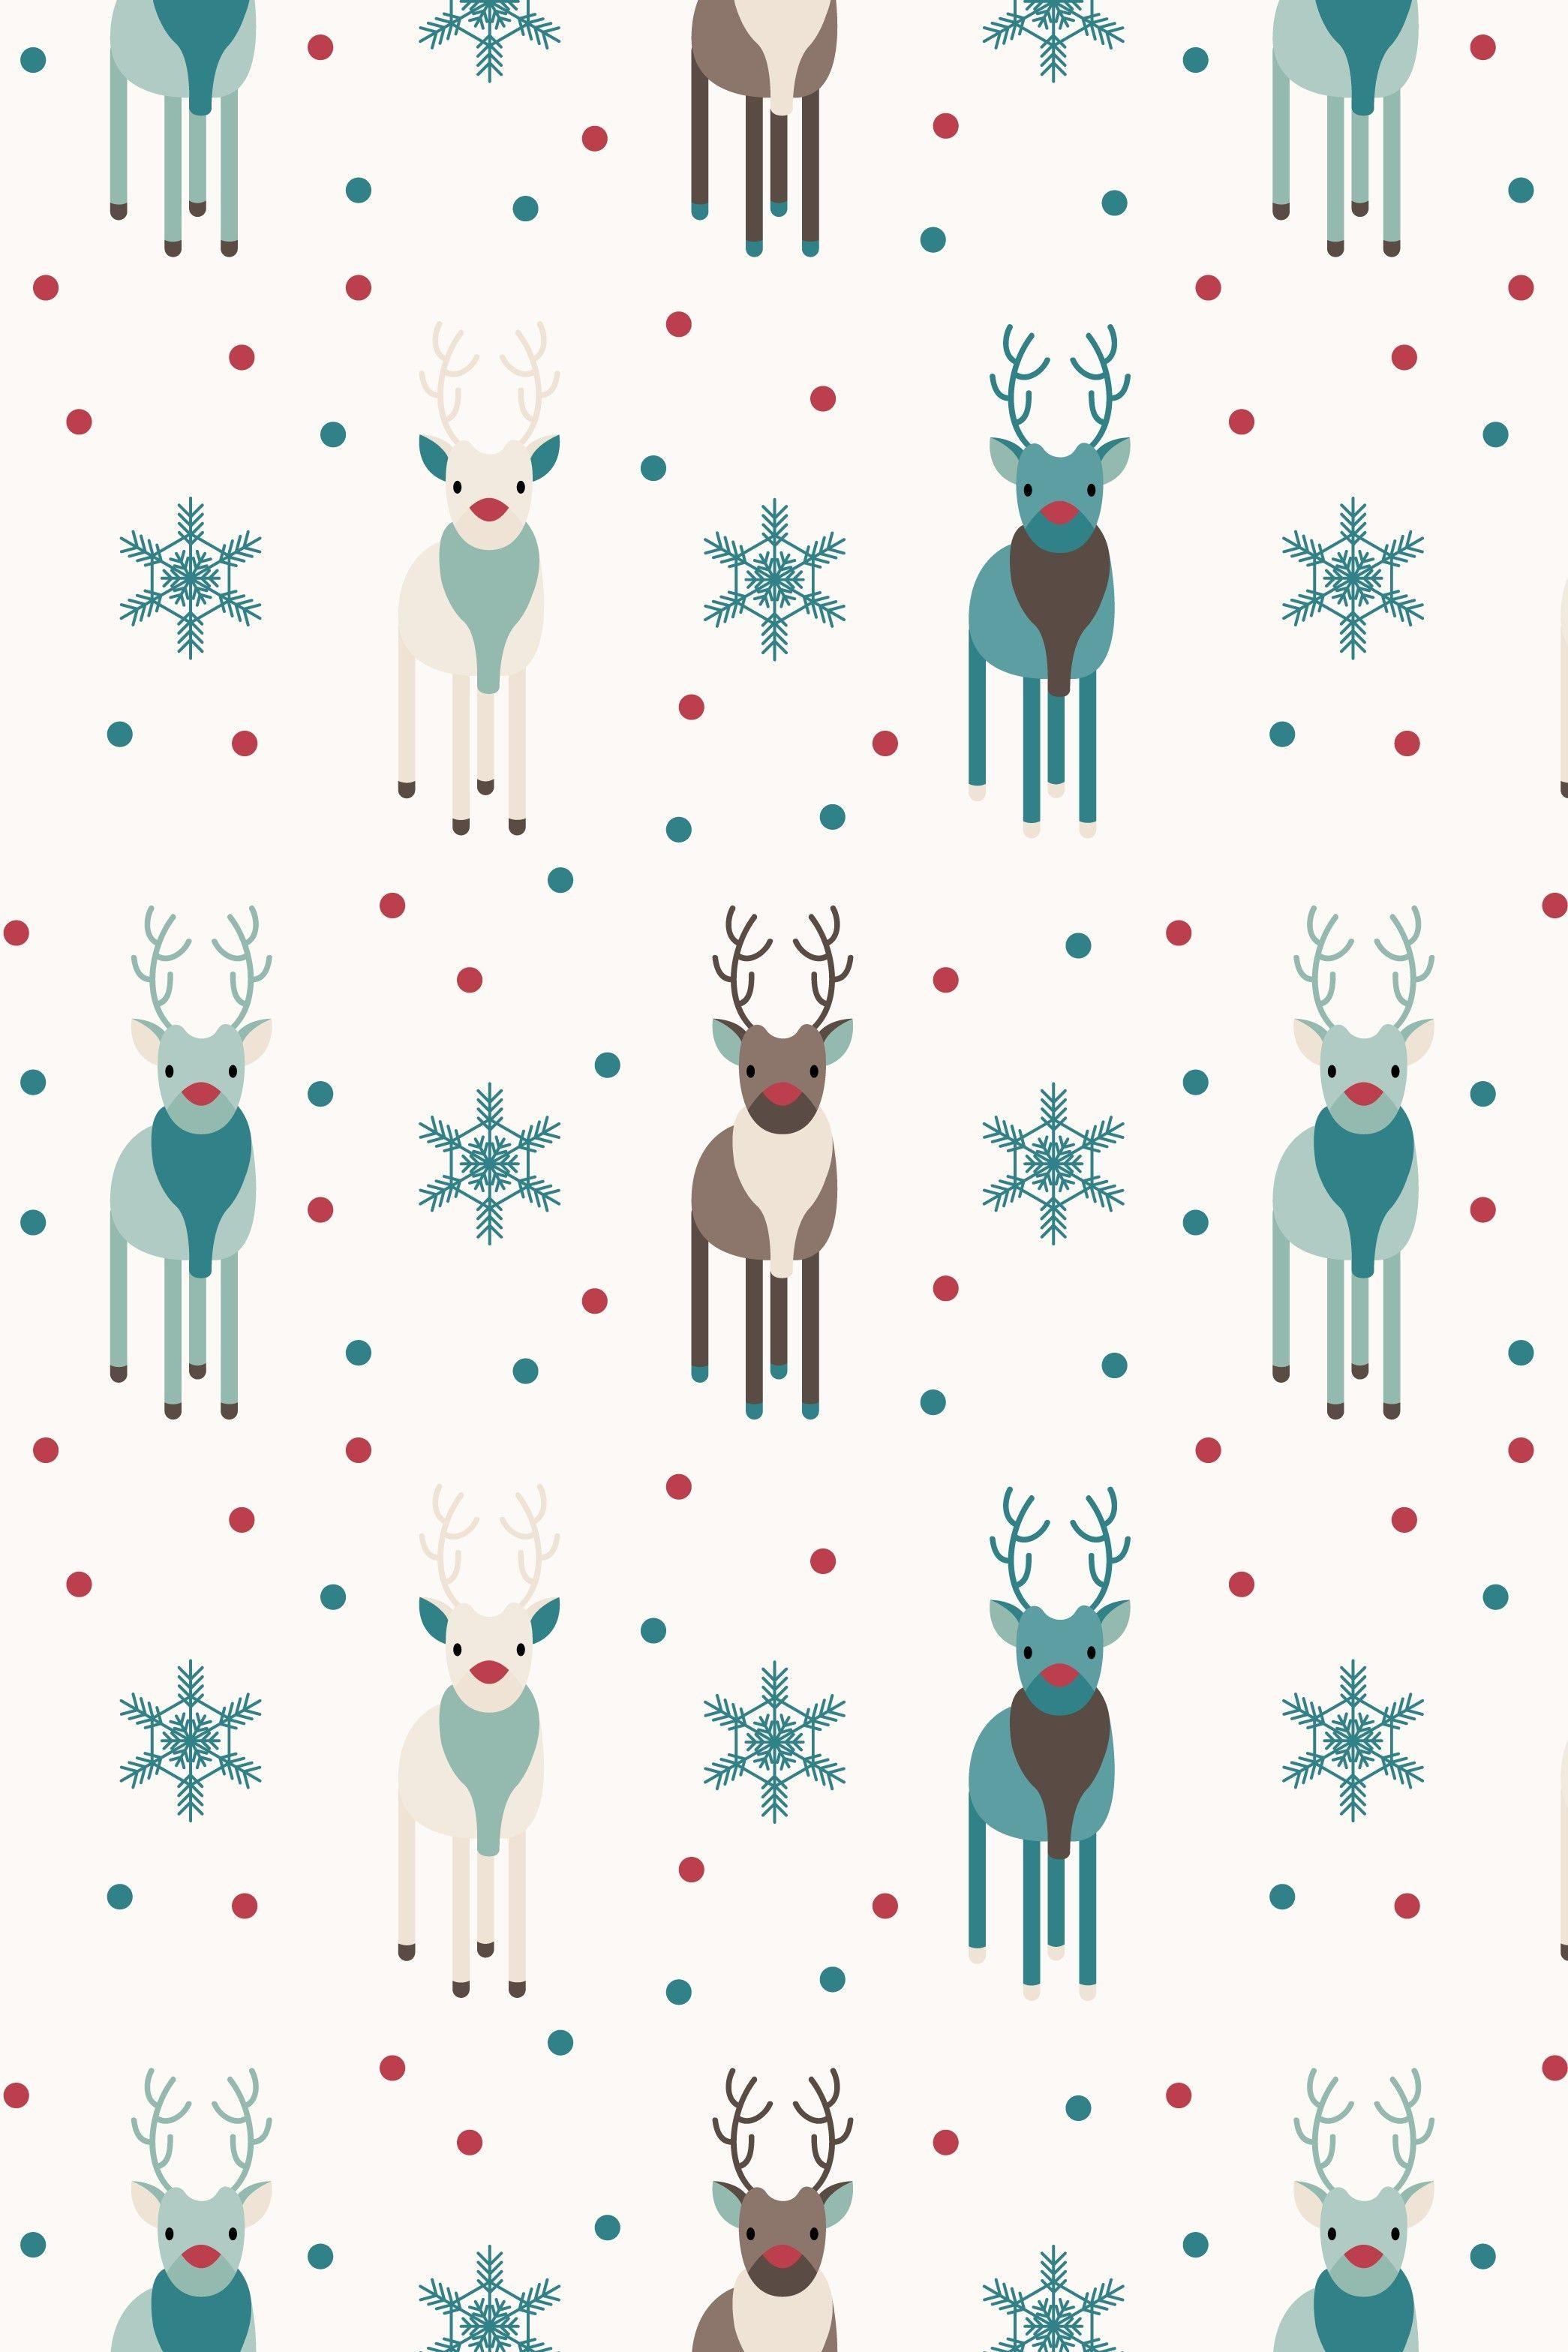 Wallpaper ID 318093  Holiday Christmas Phone Wallpaper Christmas Tree  Reindeer 1440x2960 free download